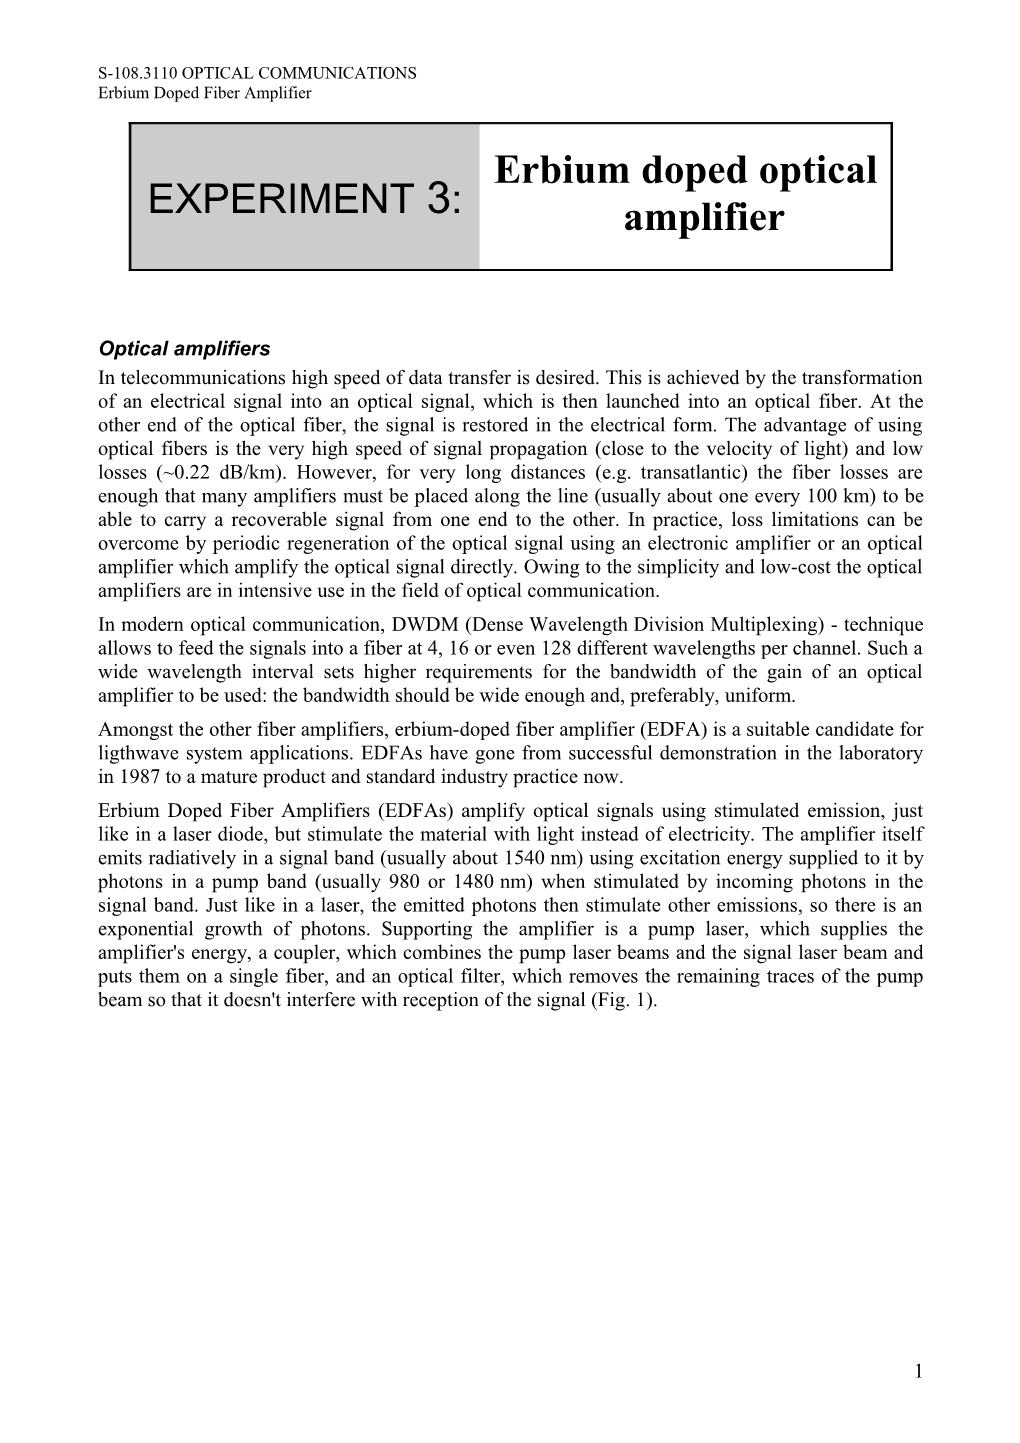 Erbium Doped Optical Amplifier